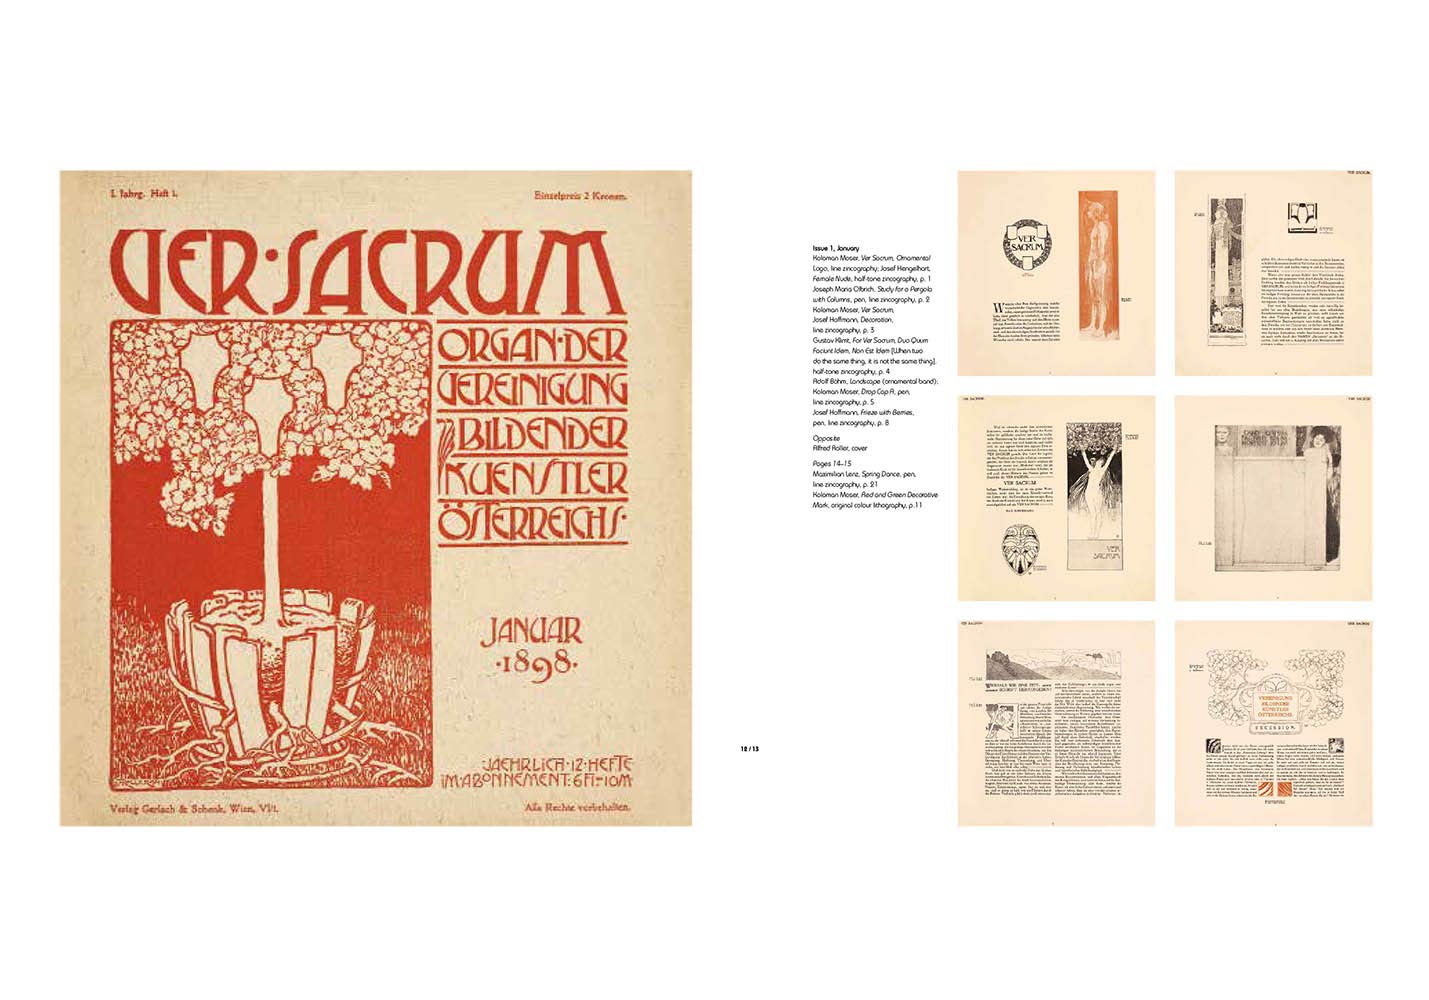 Ver Sacrum: The Vienna Secession Art Magazine 1898 1903: Gustav Klimt, Egon Schiele, Koloman Moser, Otto Wagner, Max Fabiani, Joseph Maria Olbrich, Josef Hoffmann